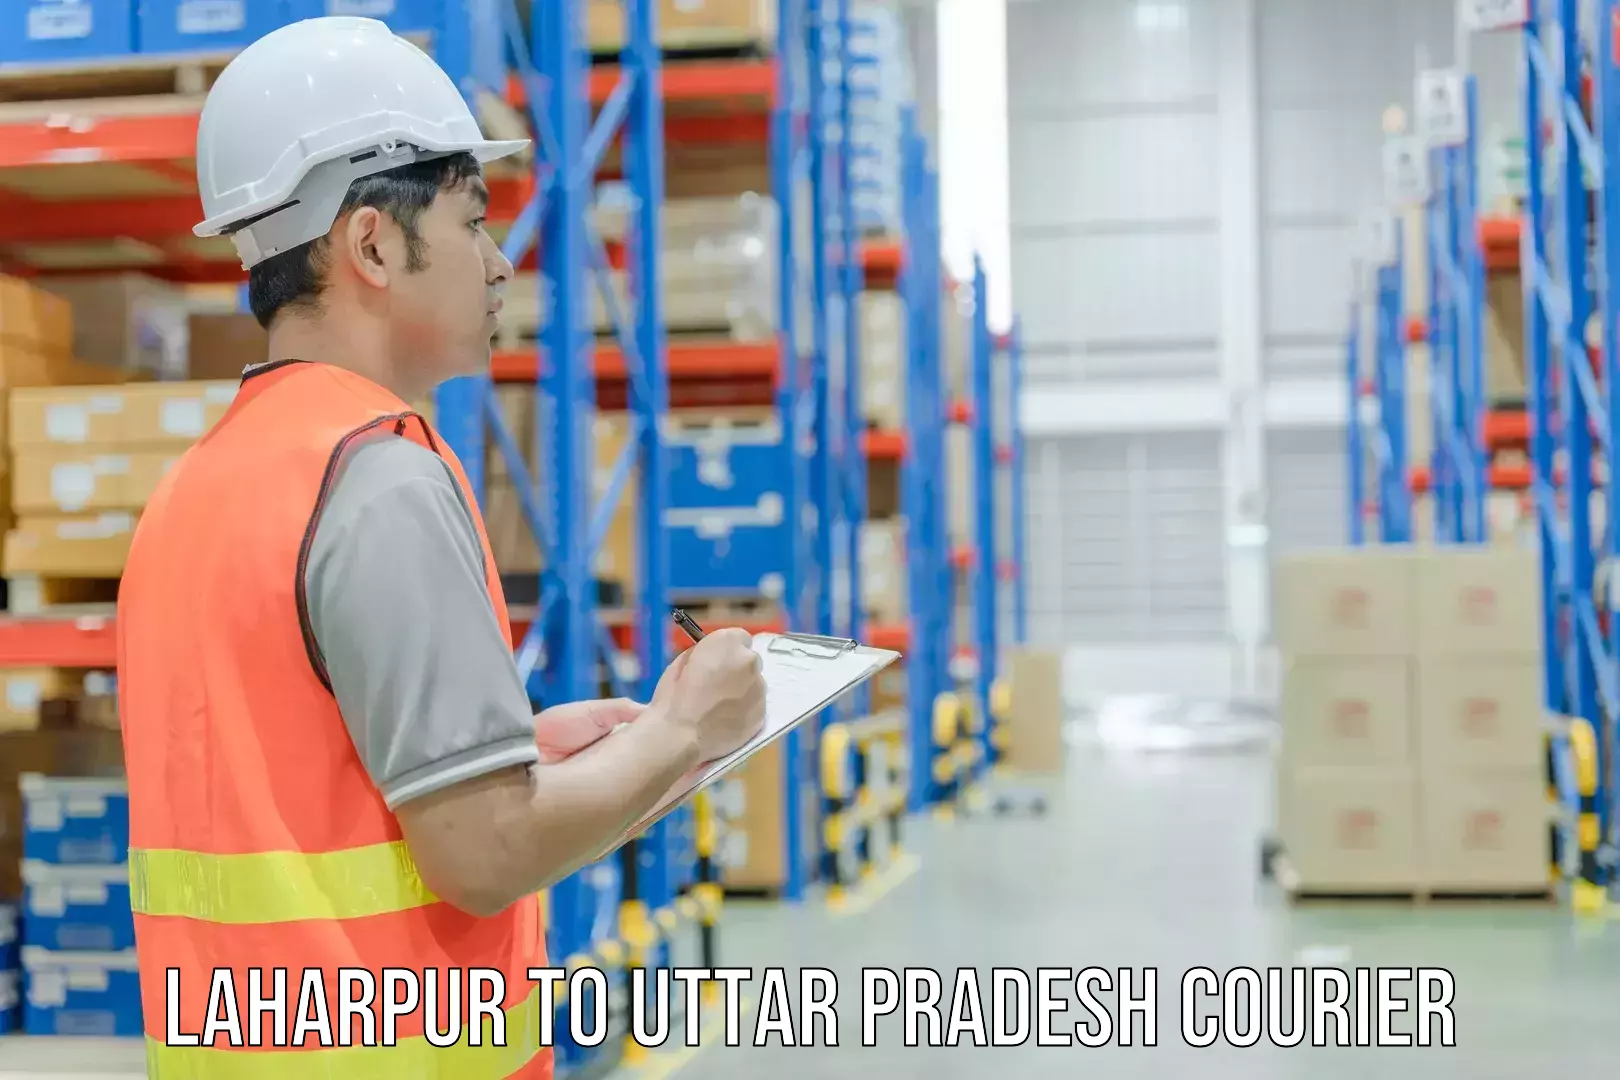 Digital courier platforms Laharpur to Bhadohi